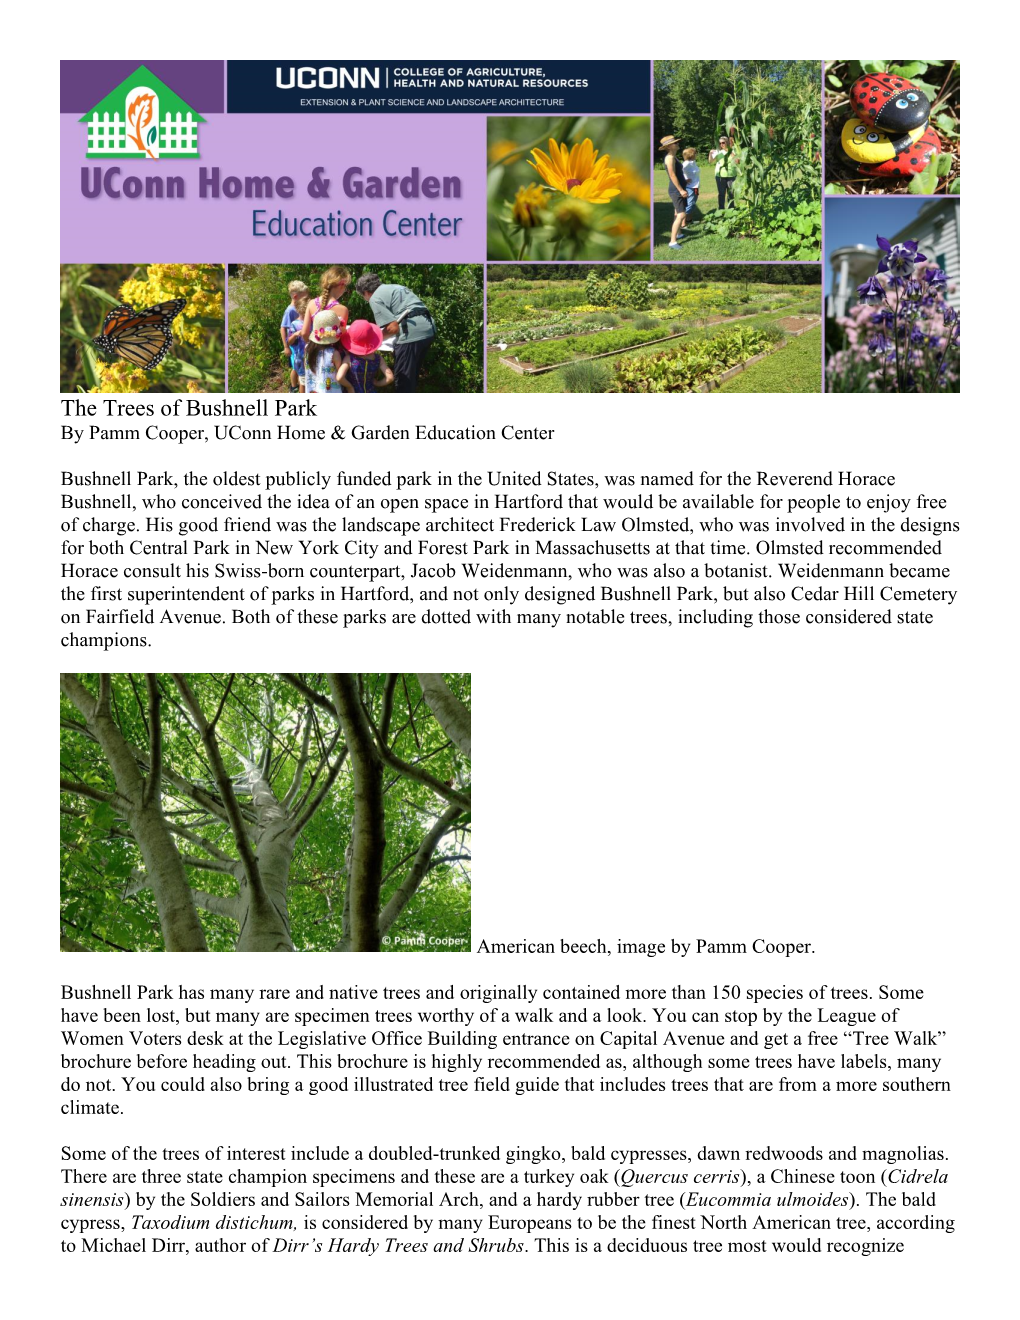 The Trees of Bushnell Park by Pamm Cooper, Uconn Home & Garden Education Center